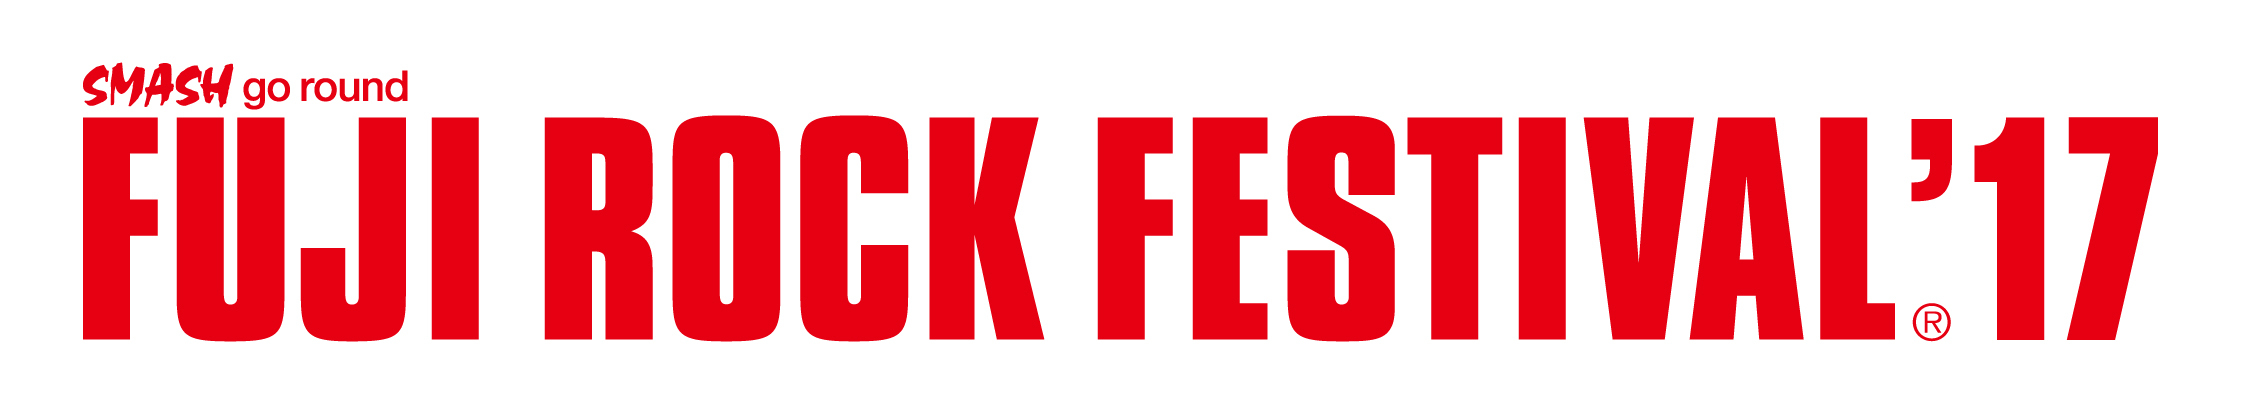 FUJI ROCK FESTIVAL’17 ロゴ